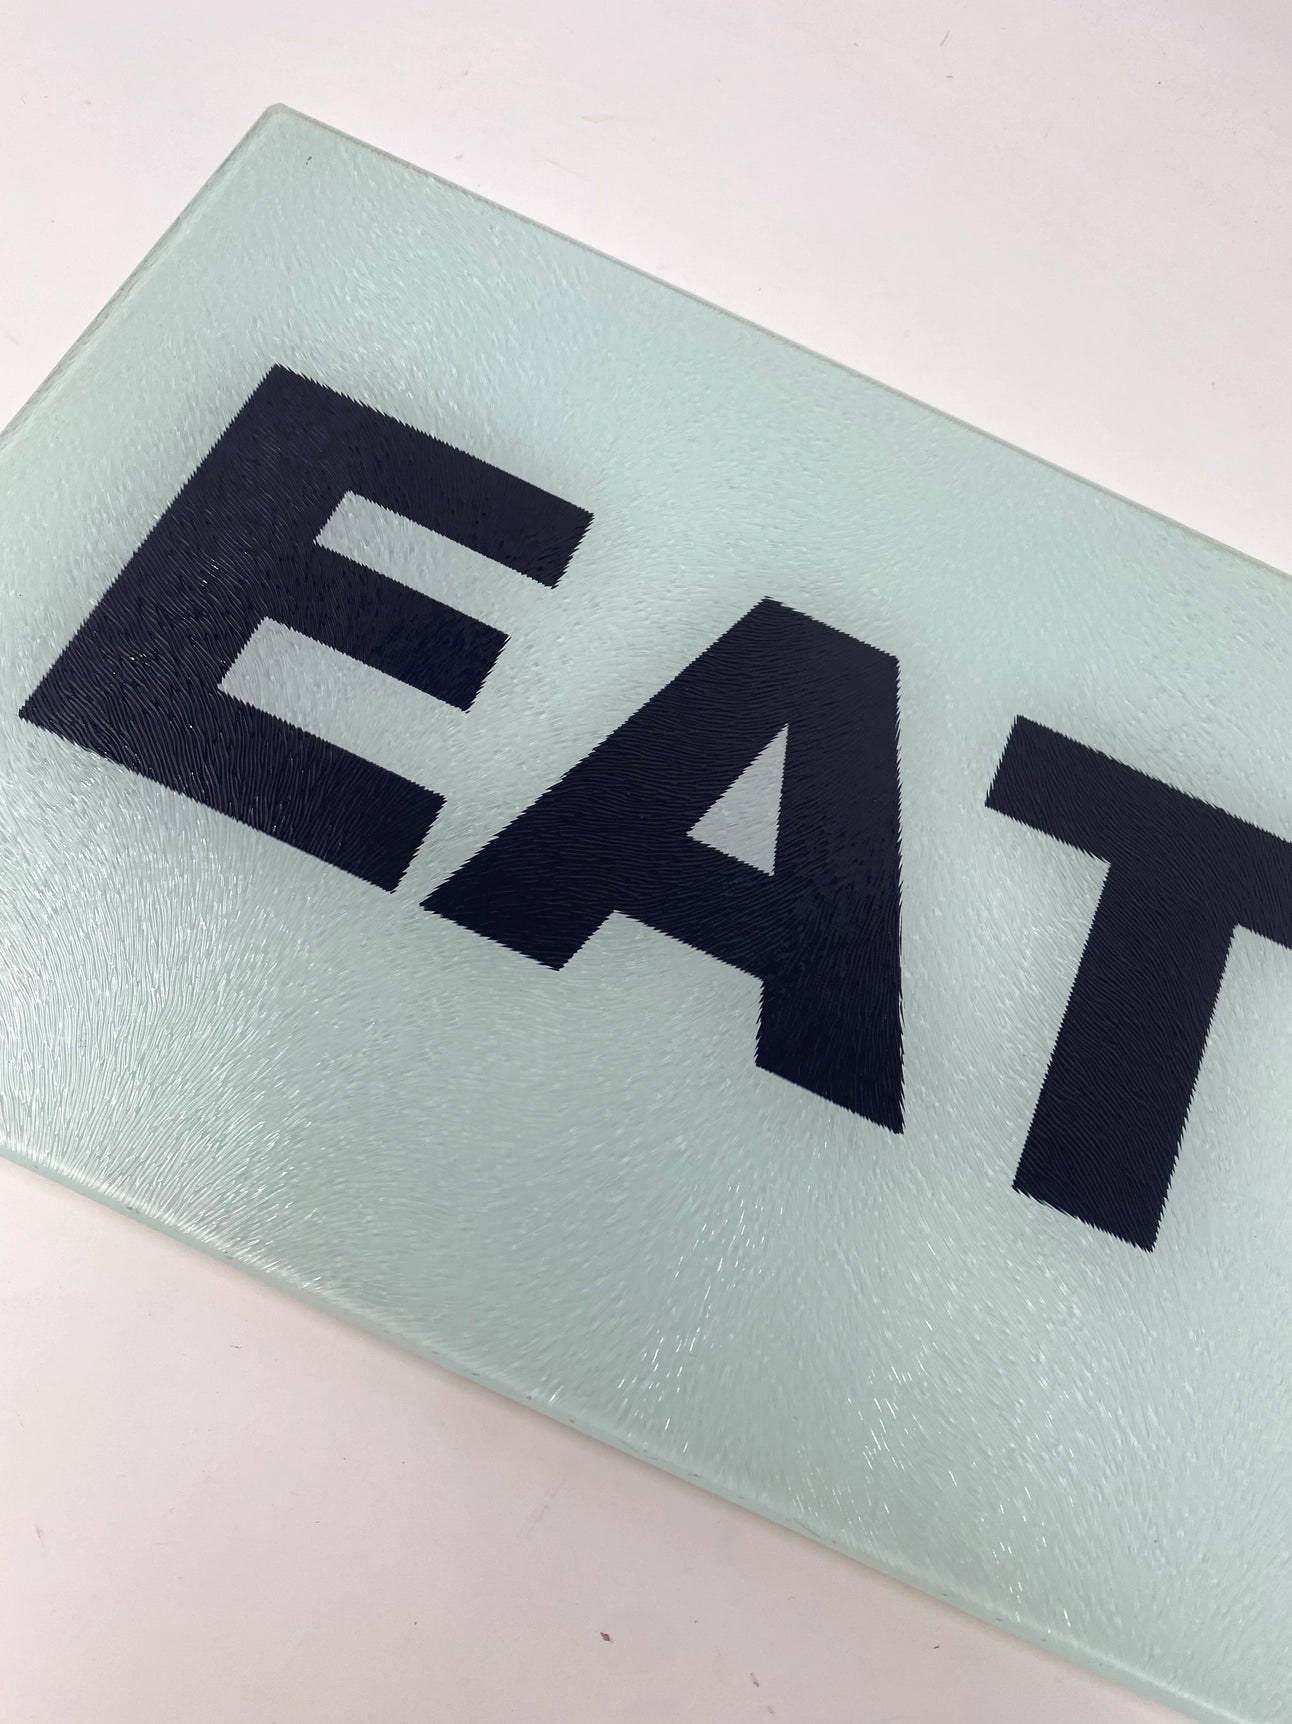 “Eat” Cutting Board